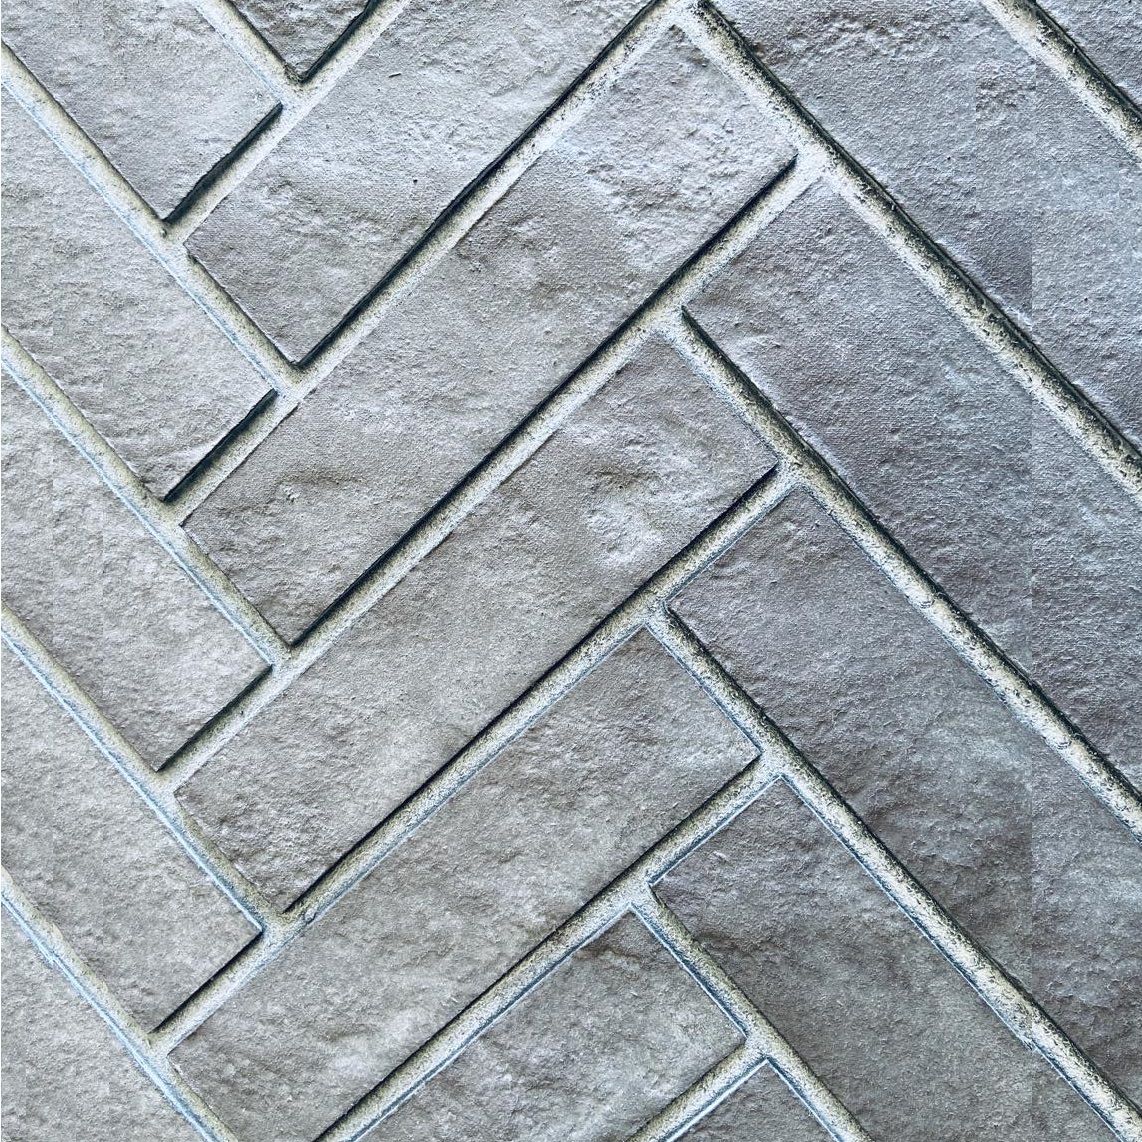 NAPDBPX42WH | Napoleon Ascent X42 Decorative Brick Panels | Westminster Herringbone Brick Pattern